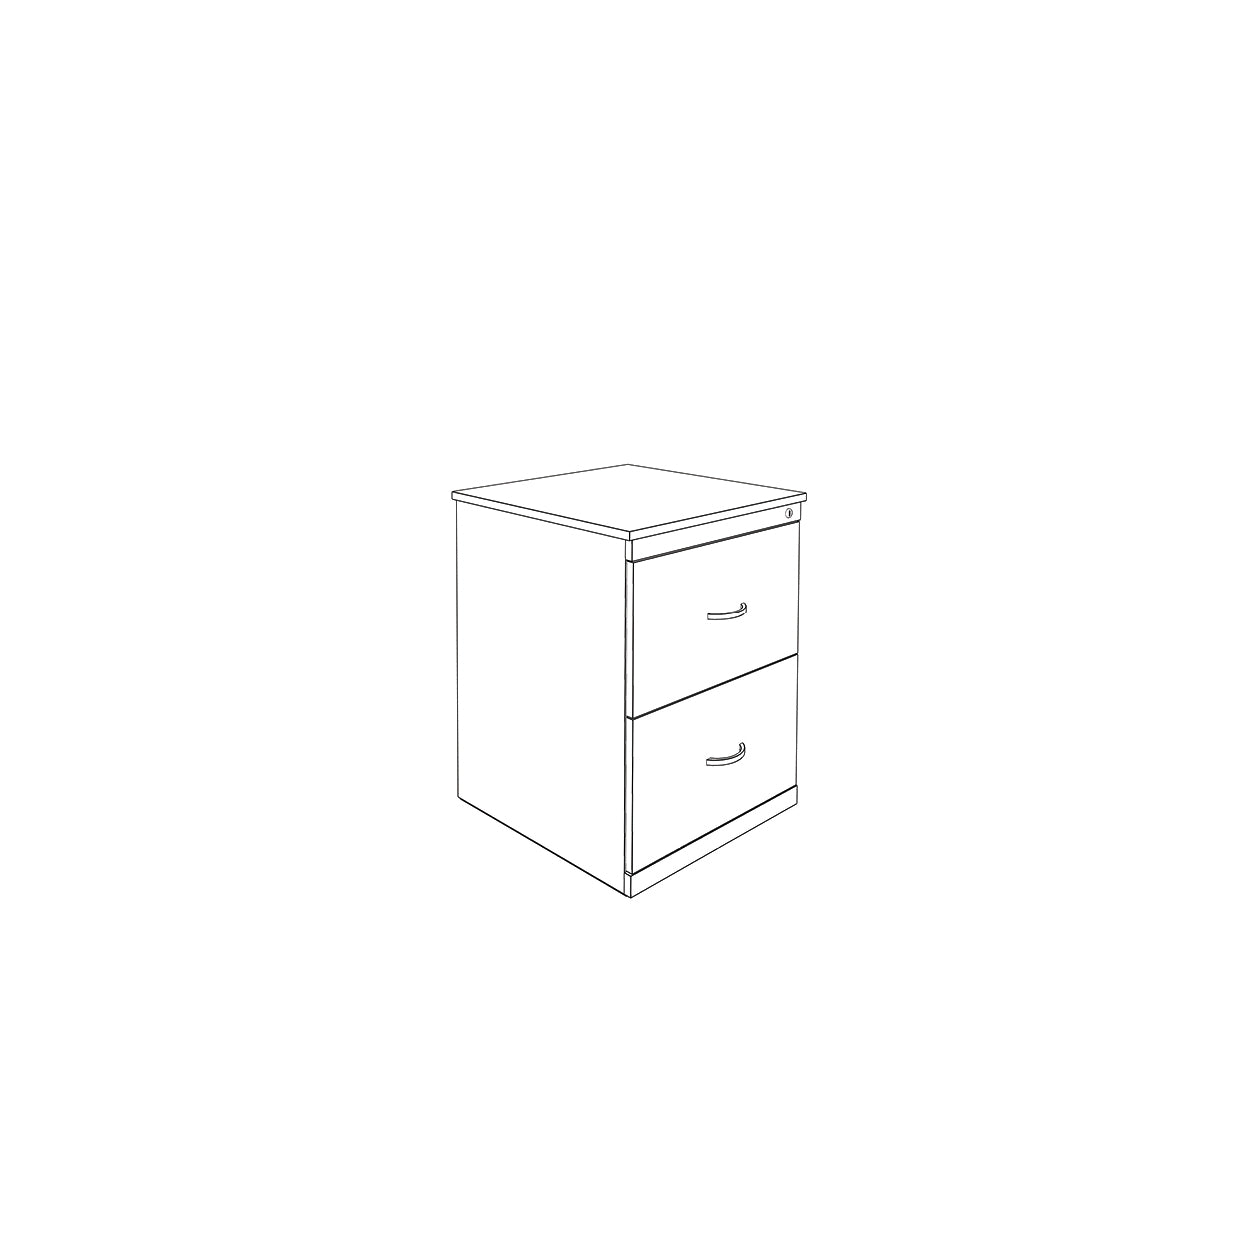 Hedcor filing 2 drawer